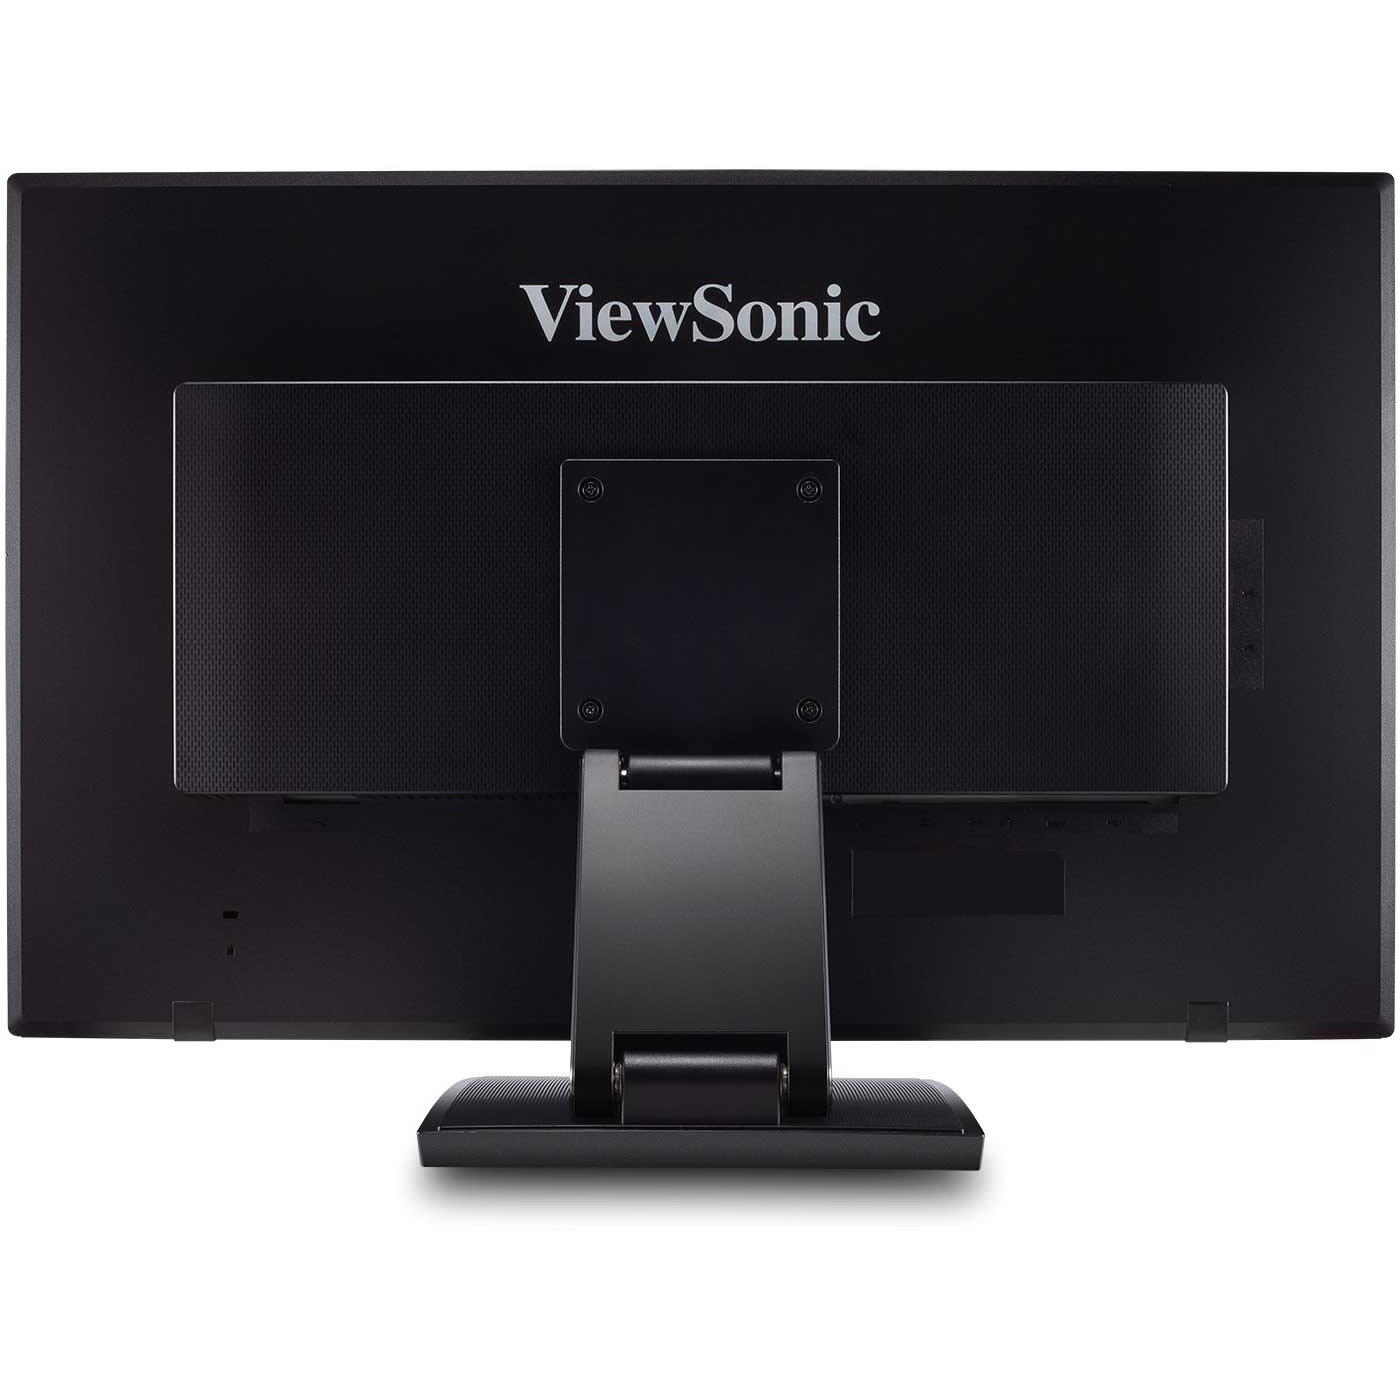 ViewSonic TD2760 27" Class LCD Touchscreen Monitor - 16:9 - 6 ms